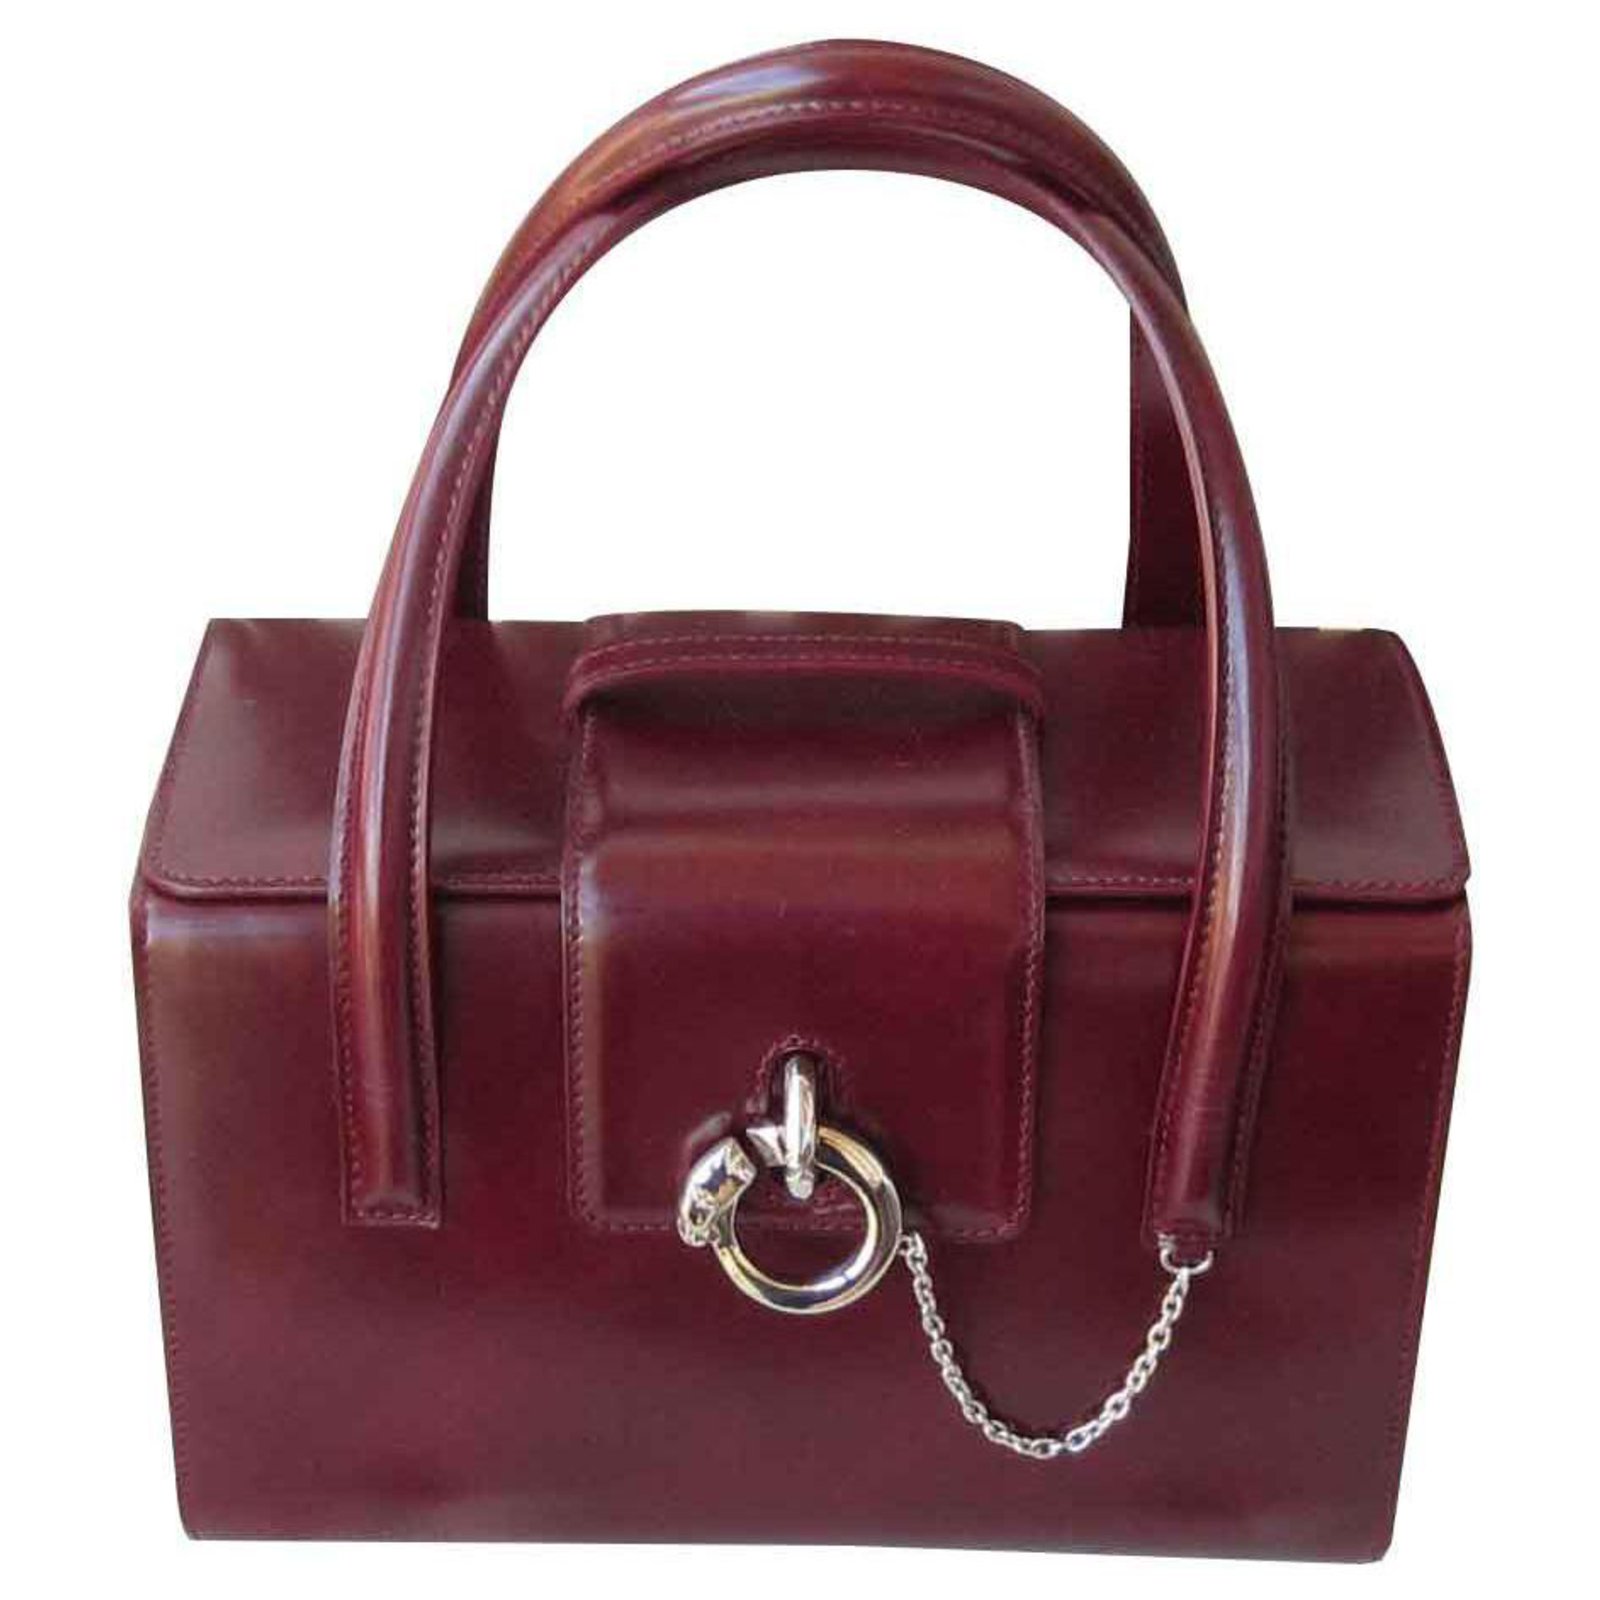 cartier box handbag